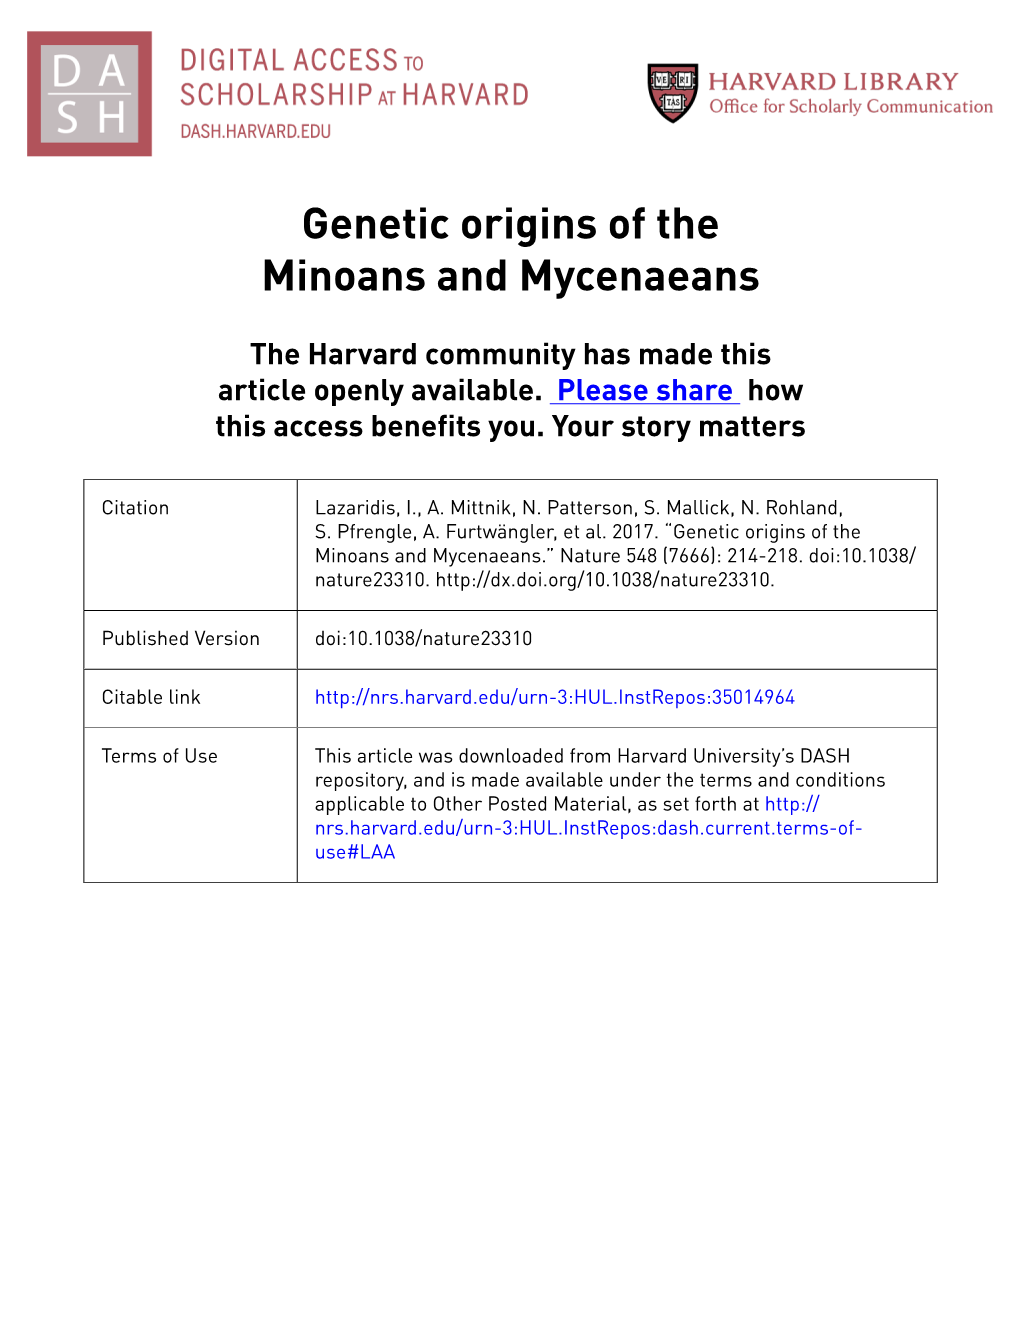 Genetic Origins of the Minoans and Mycenaeans